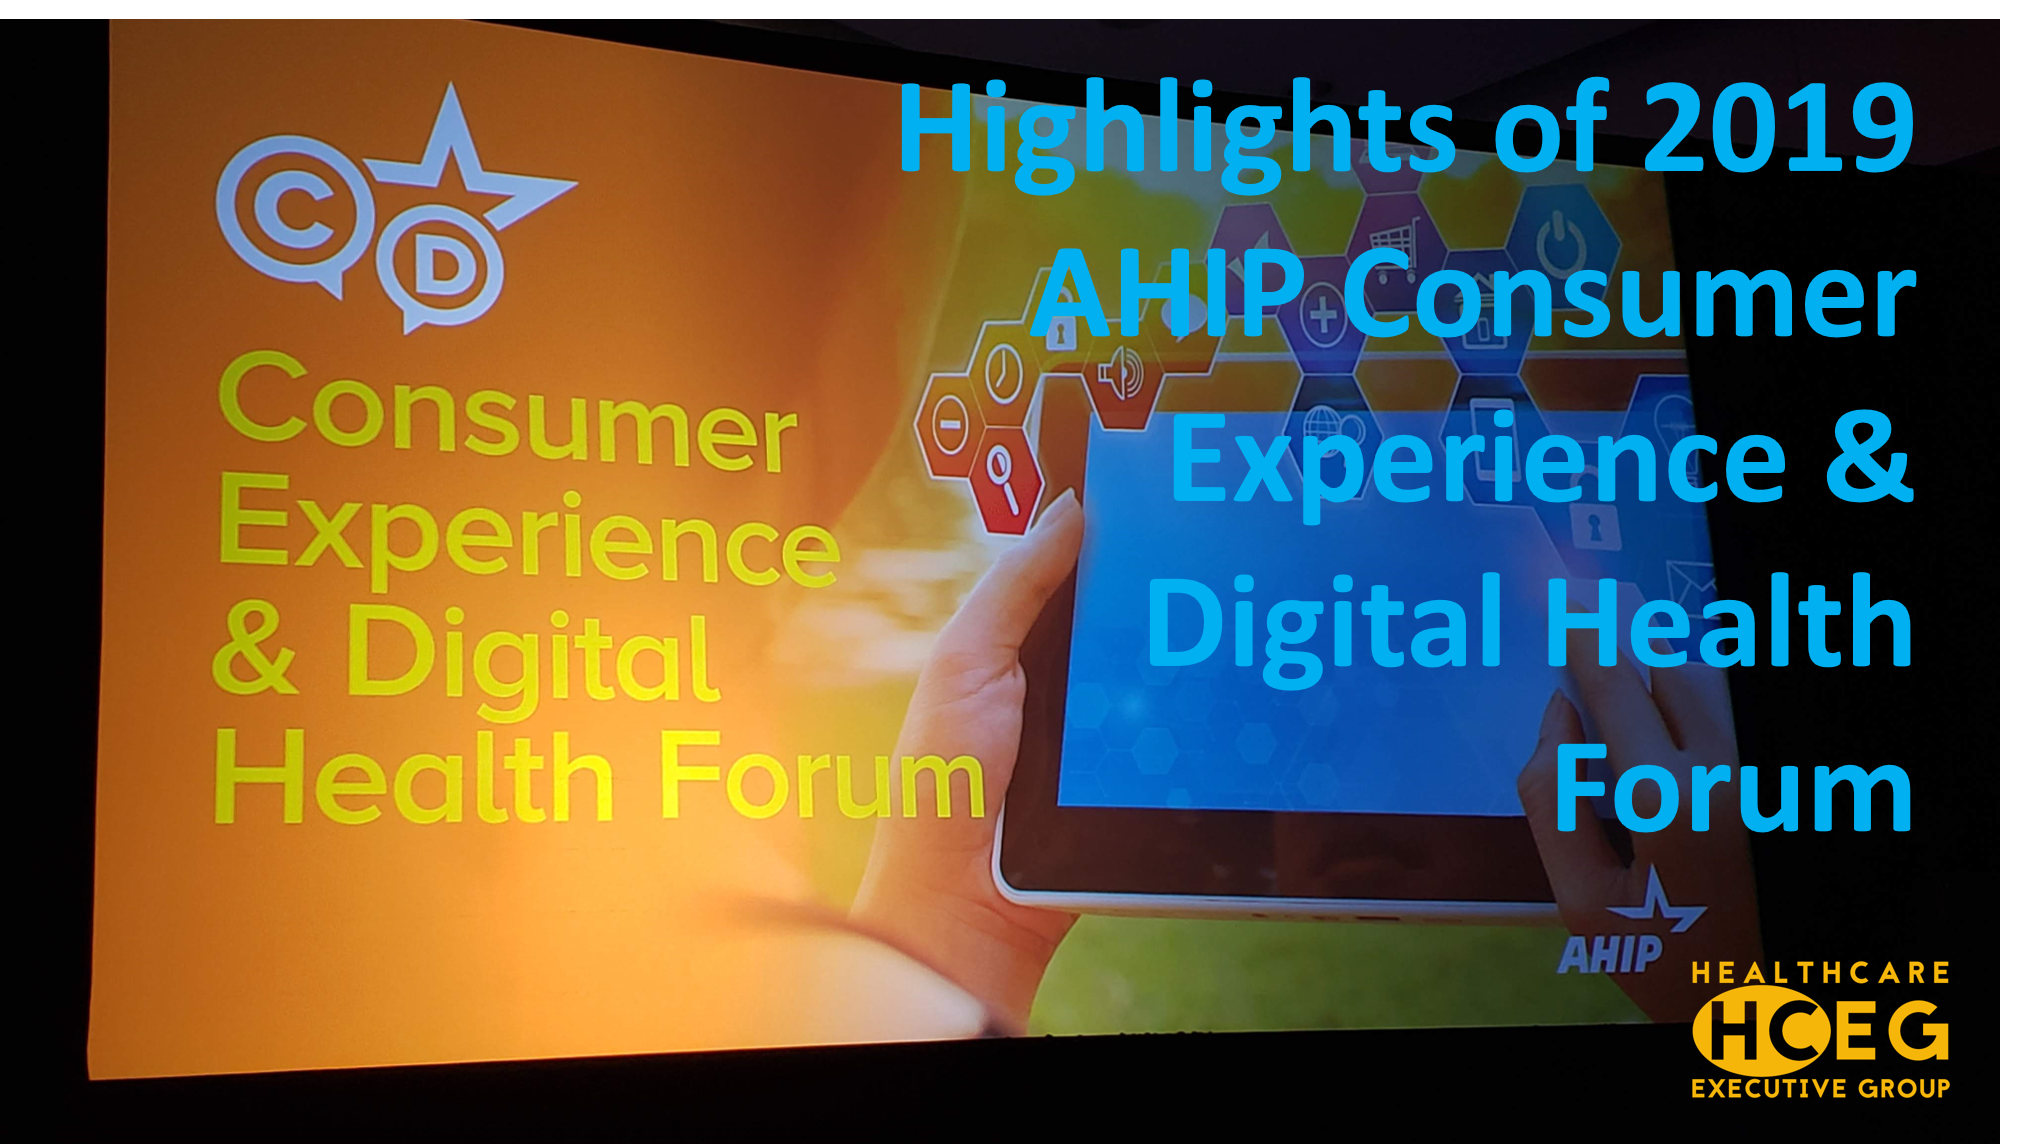 Highlights of 2019 AHIP Consumer Experience & Digital Health Forum